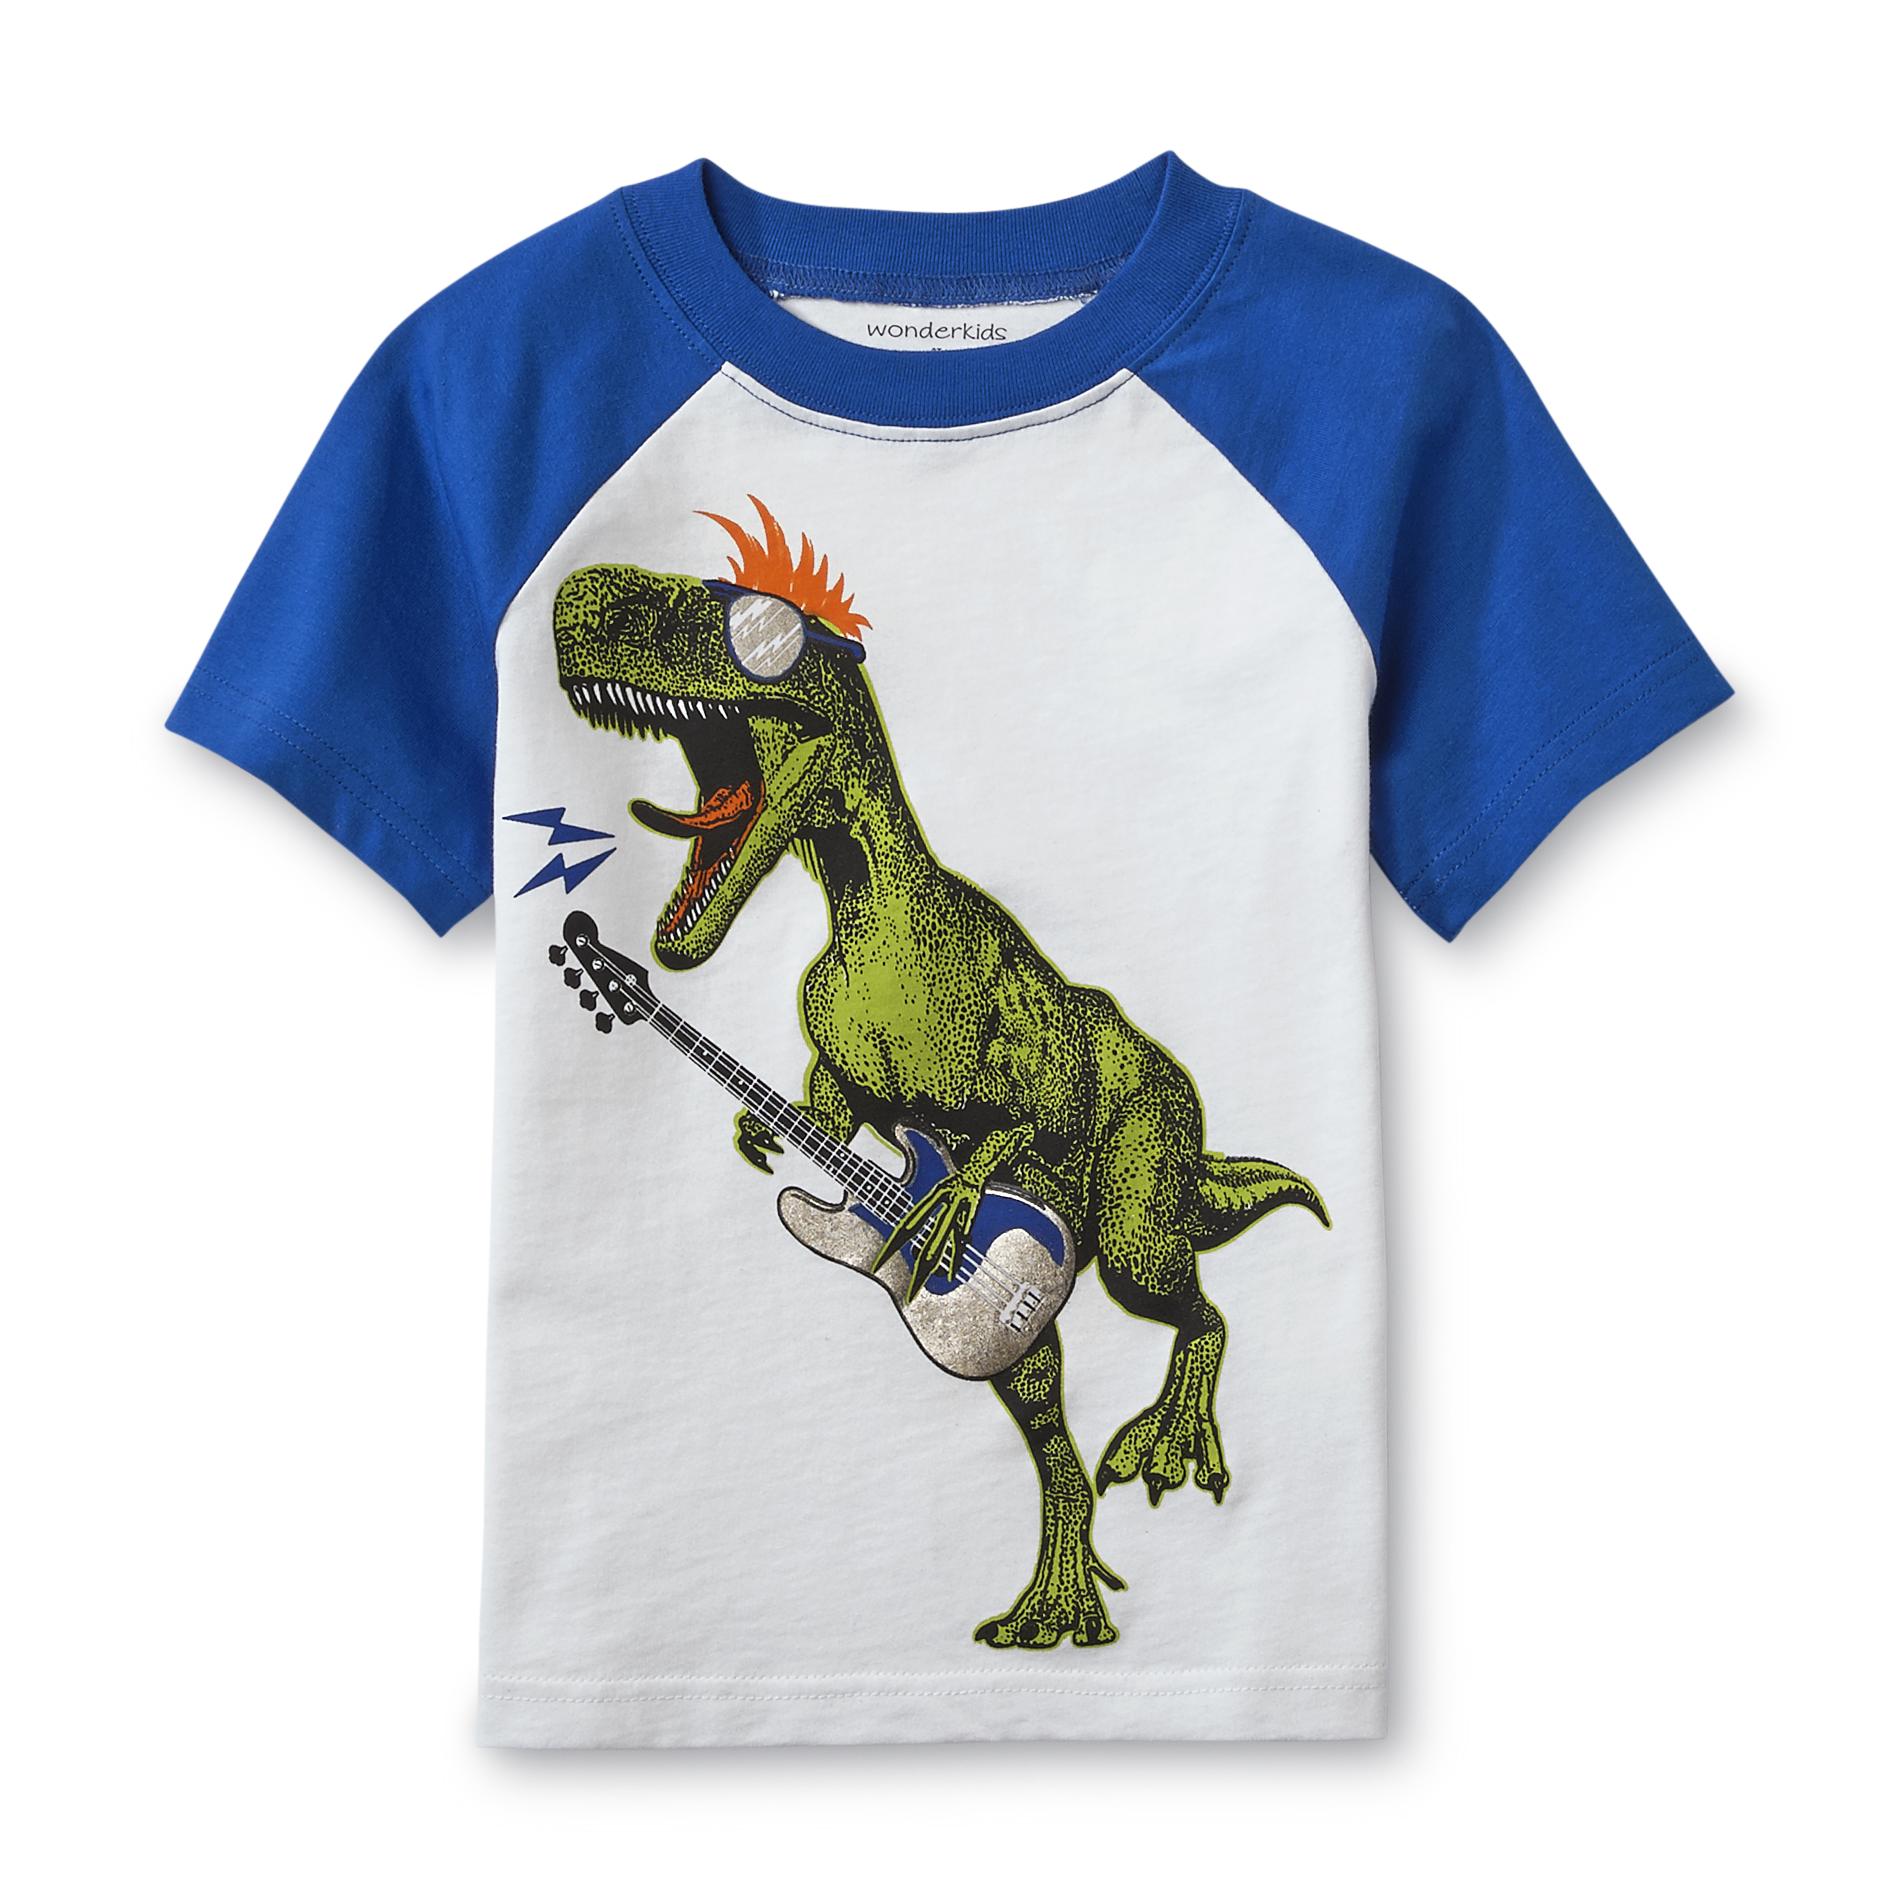 WonderKids Infant & Toddler Boy's Raglan Graphic T-Shirt - Dinosaur